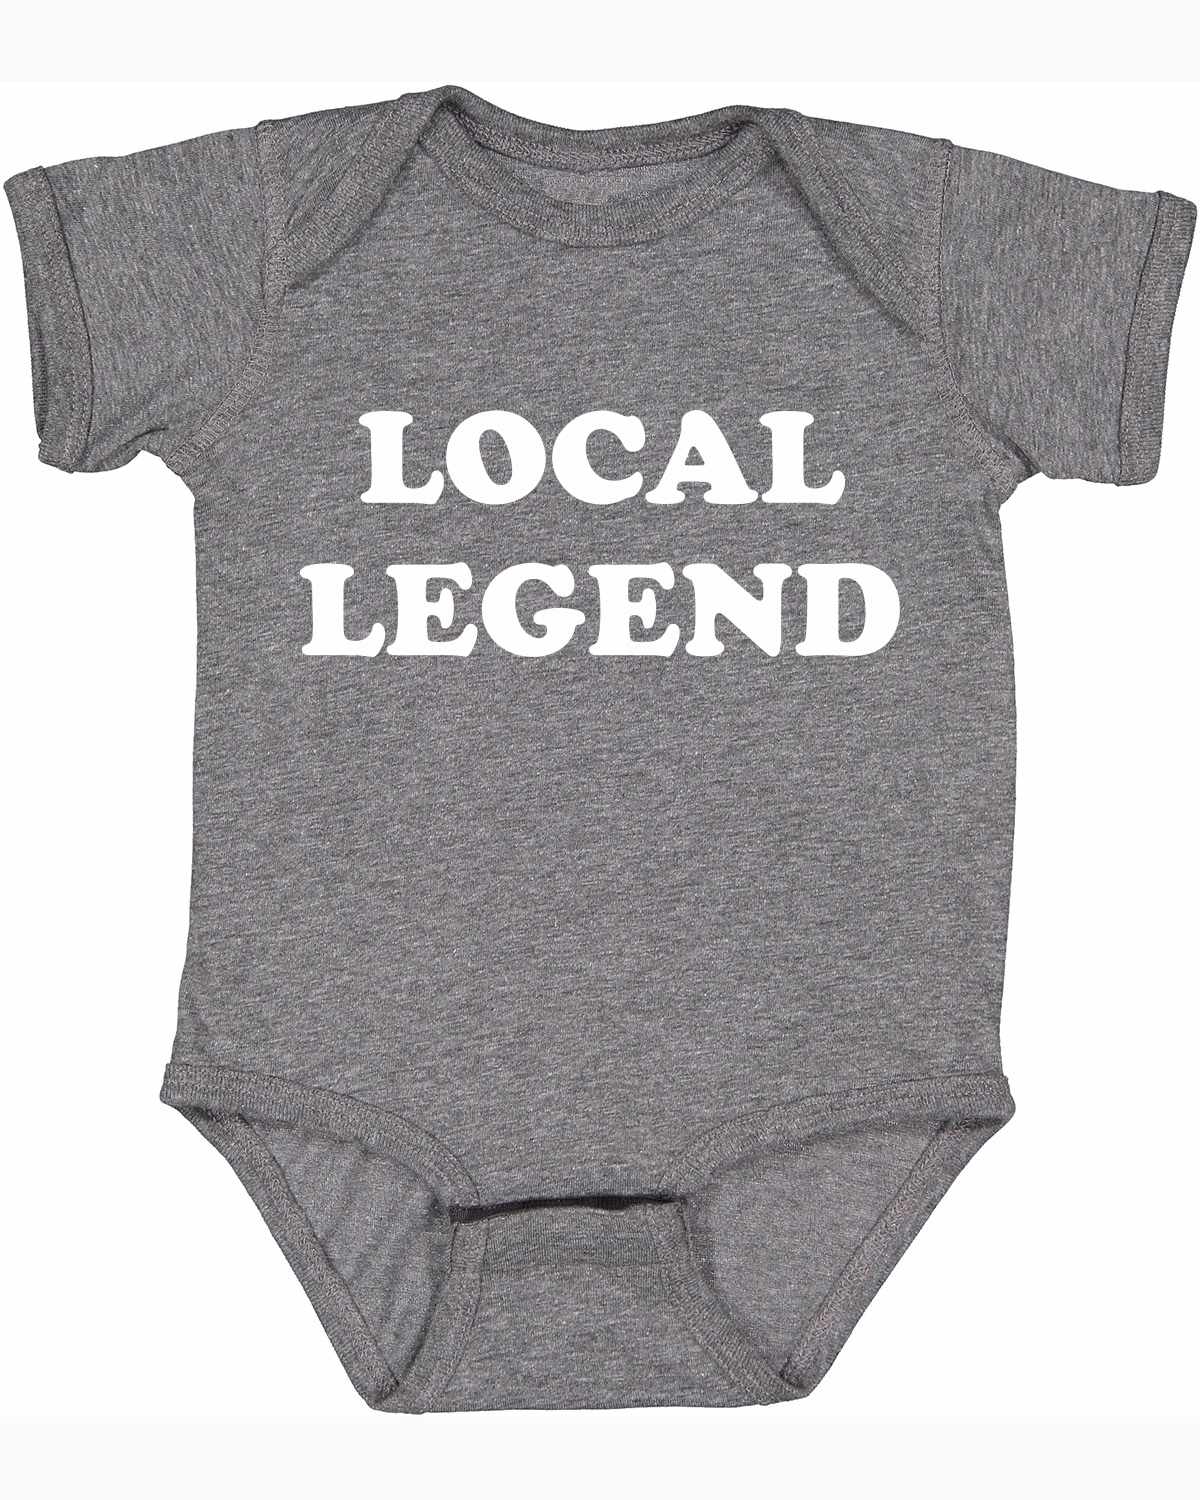 Local Legend on Infant BodySuit